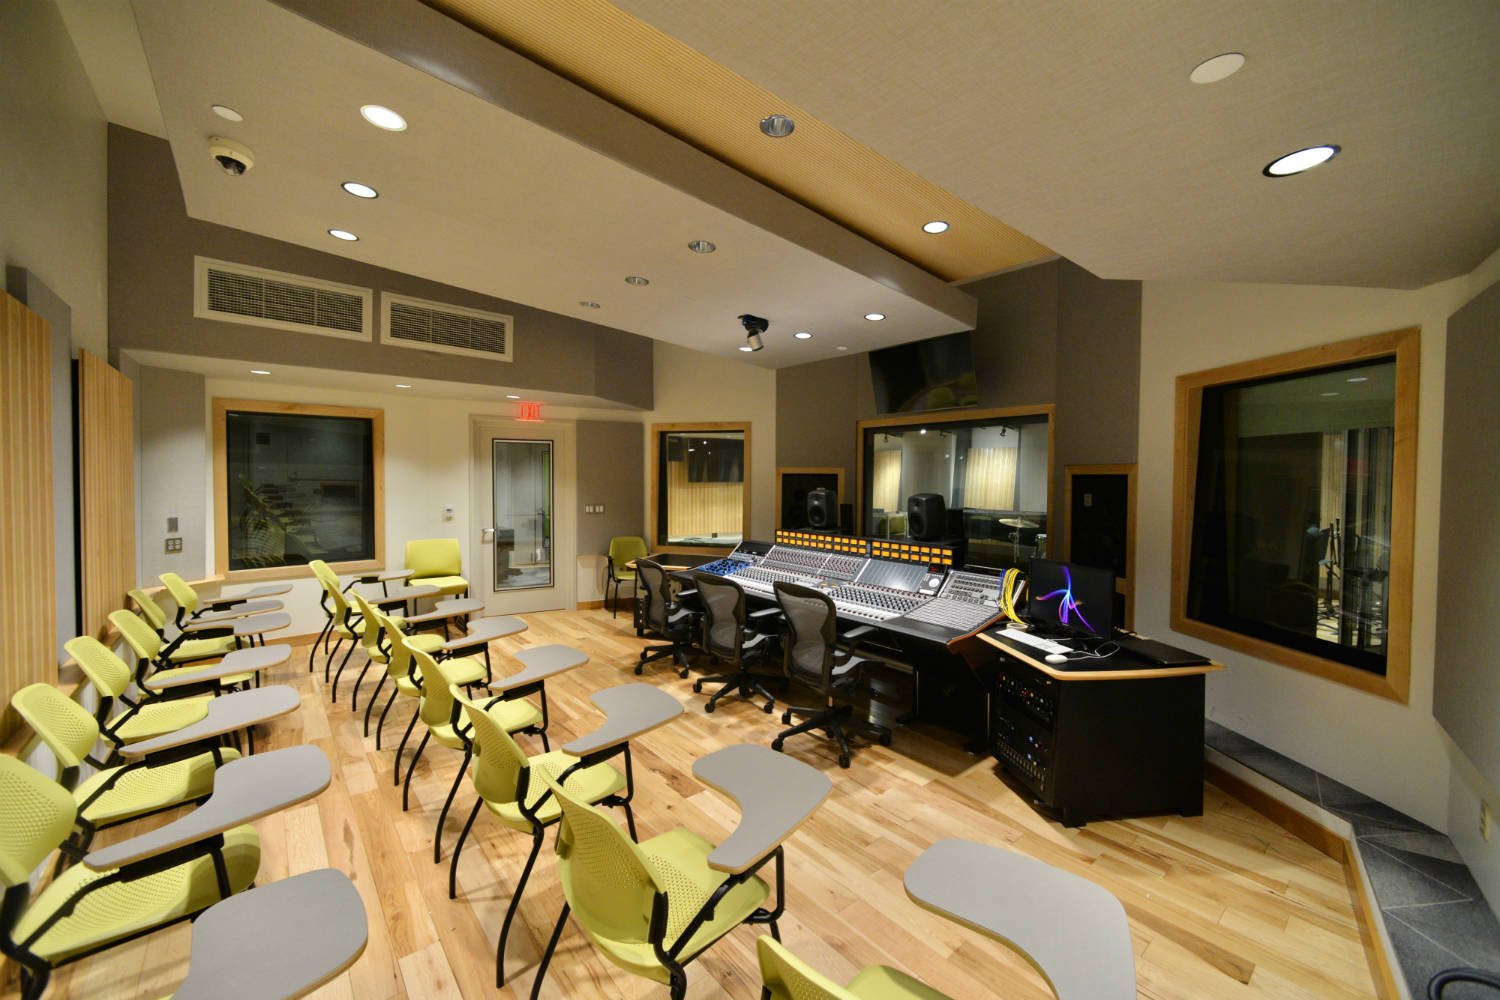 Music Industry Studios